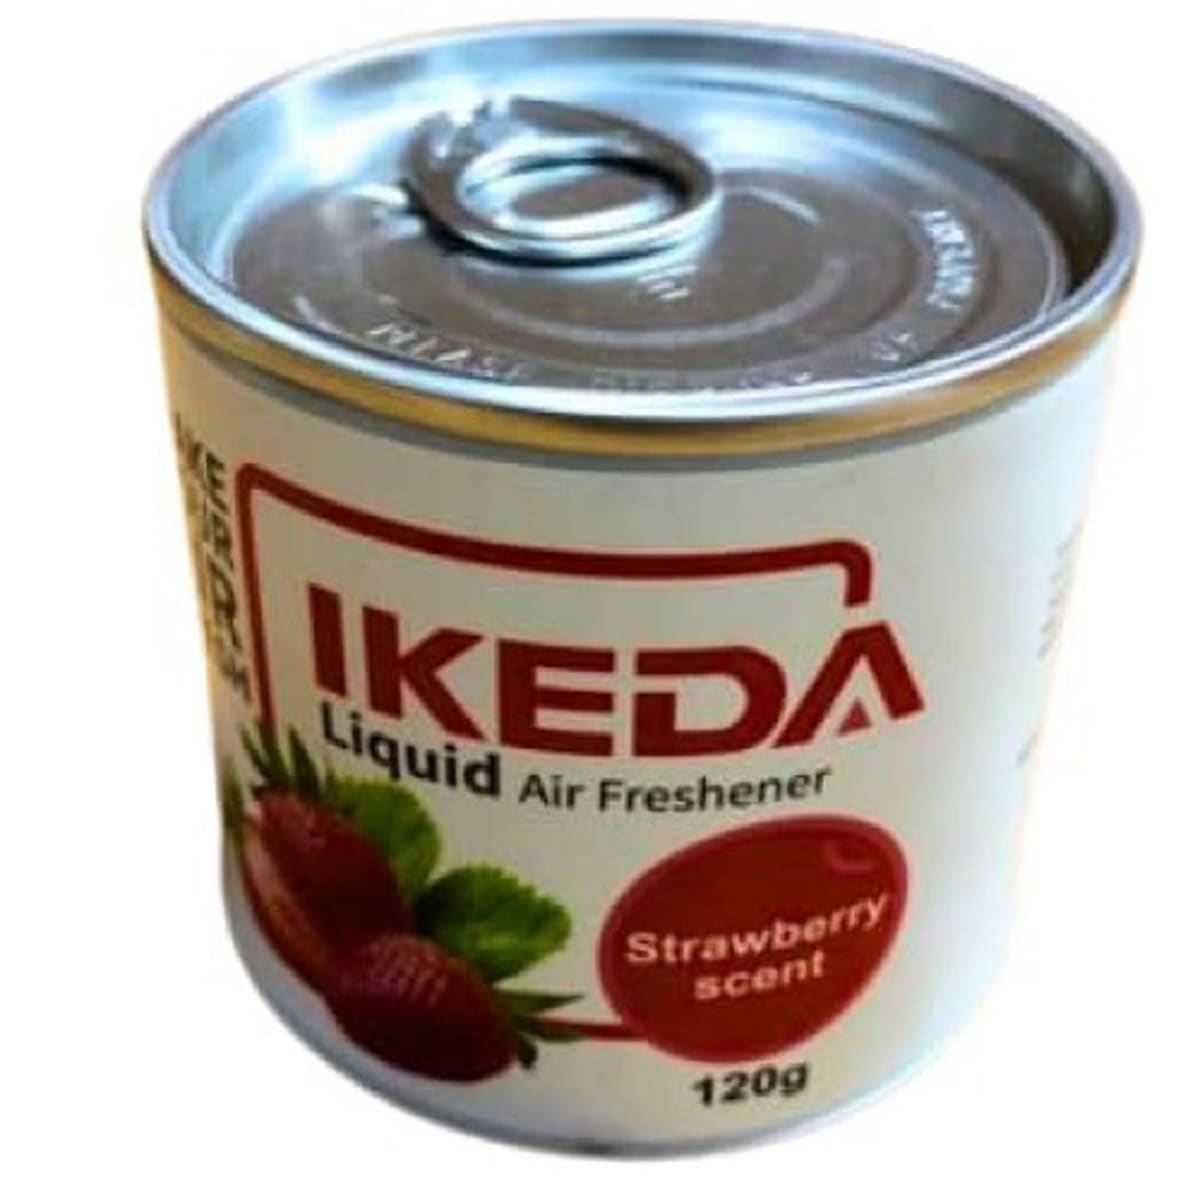 IKEDA Long Lasting Liquid Air Freshner For Car/home - Strawberry